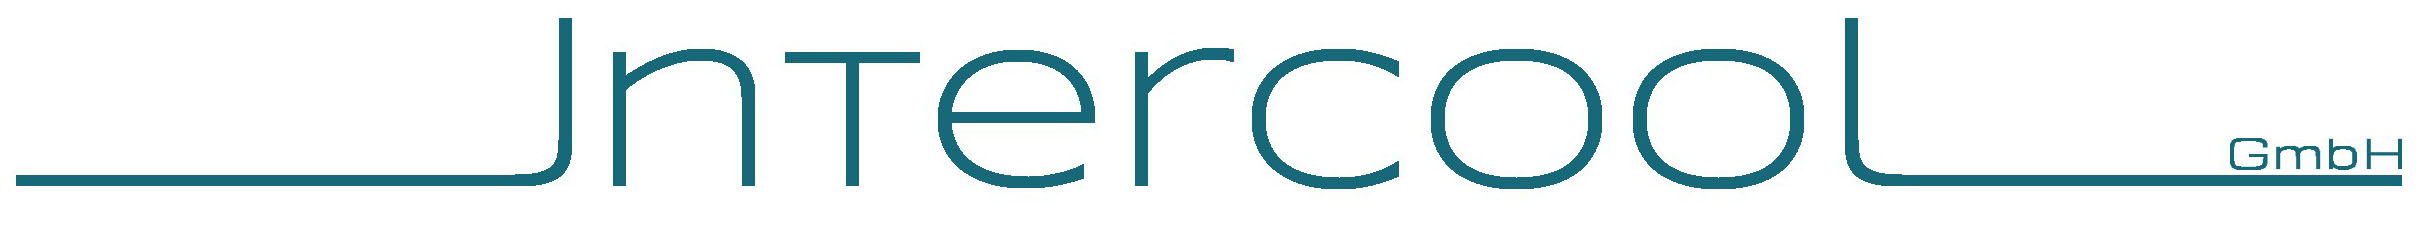 Intercool GmbH Logo